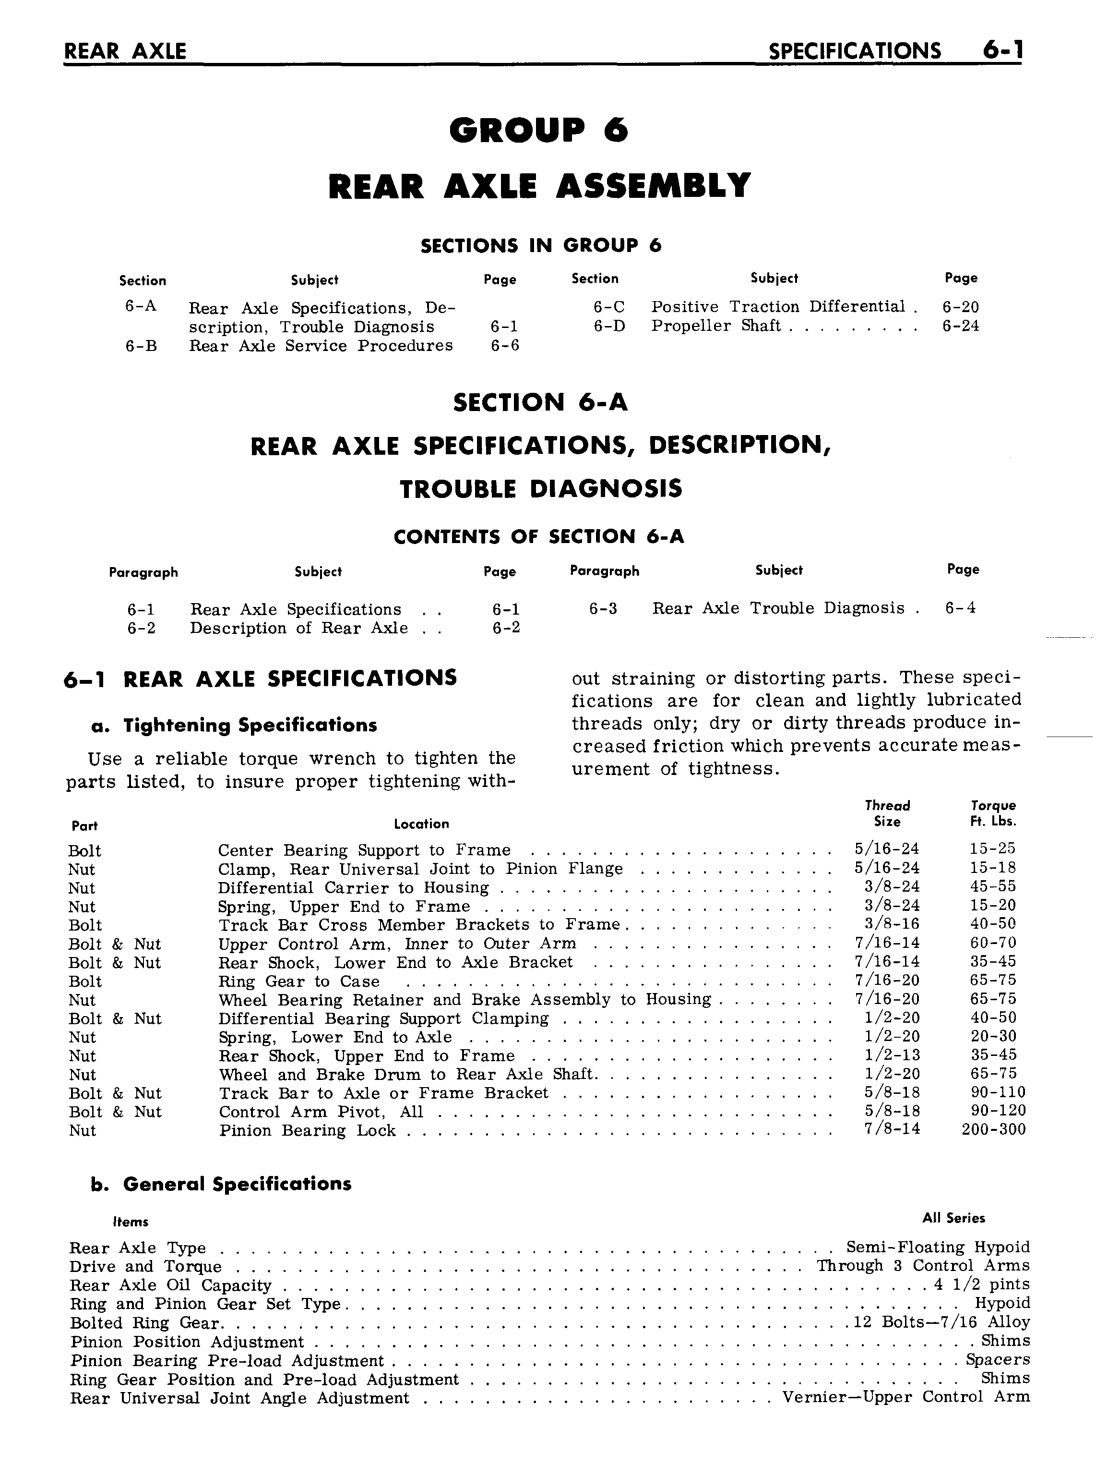 n_06 1961 Buick Shop Manual - Rear Axle-001-001.jpg